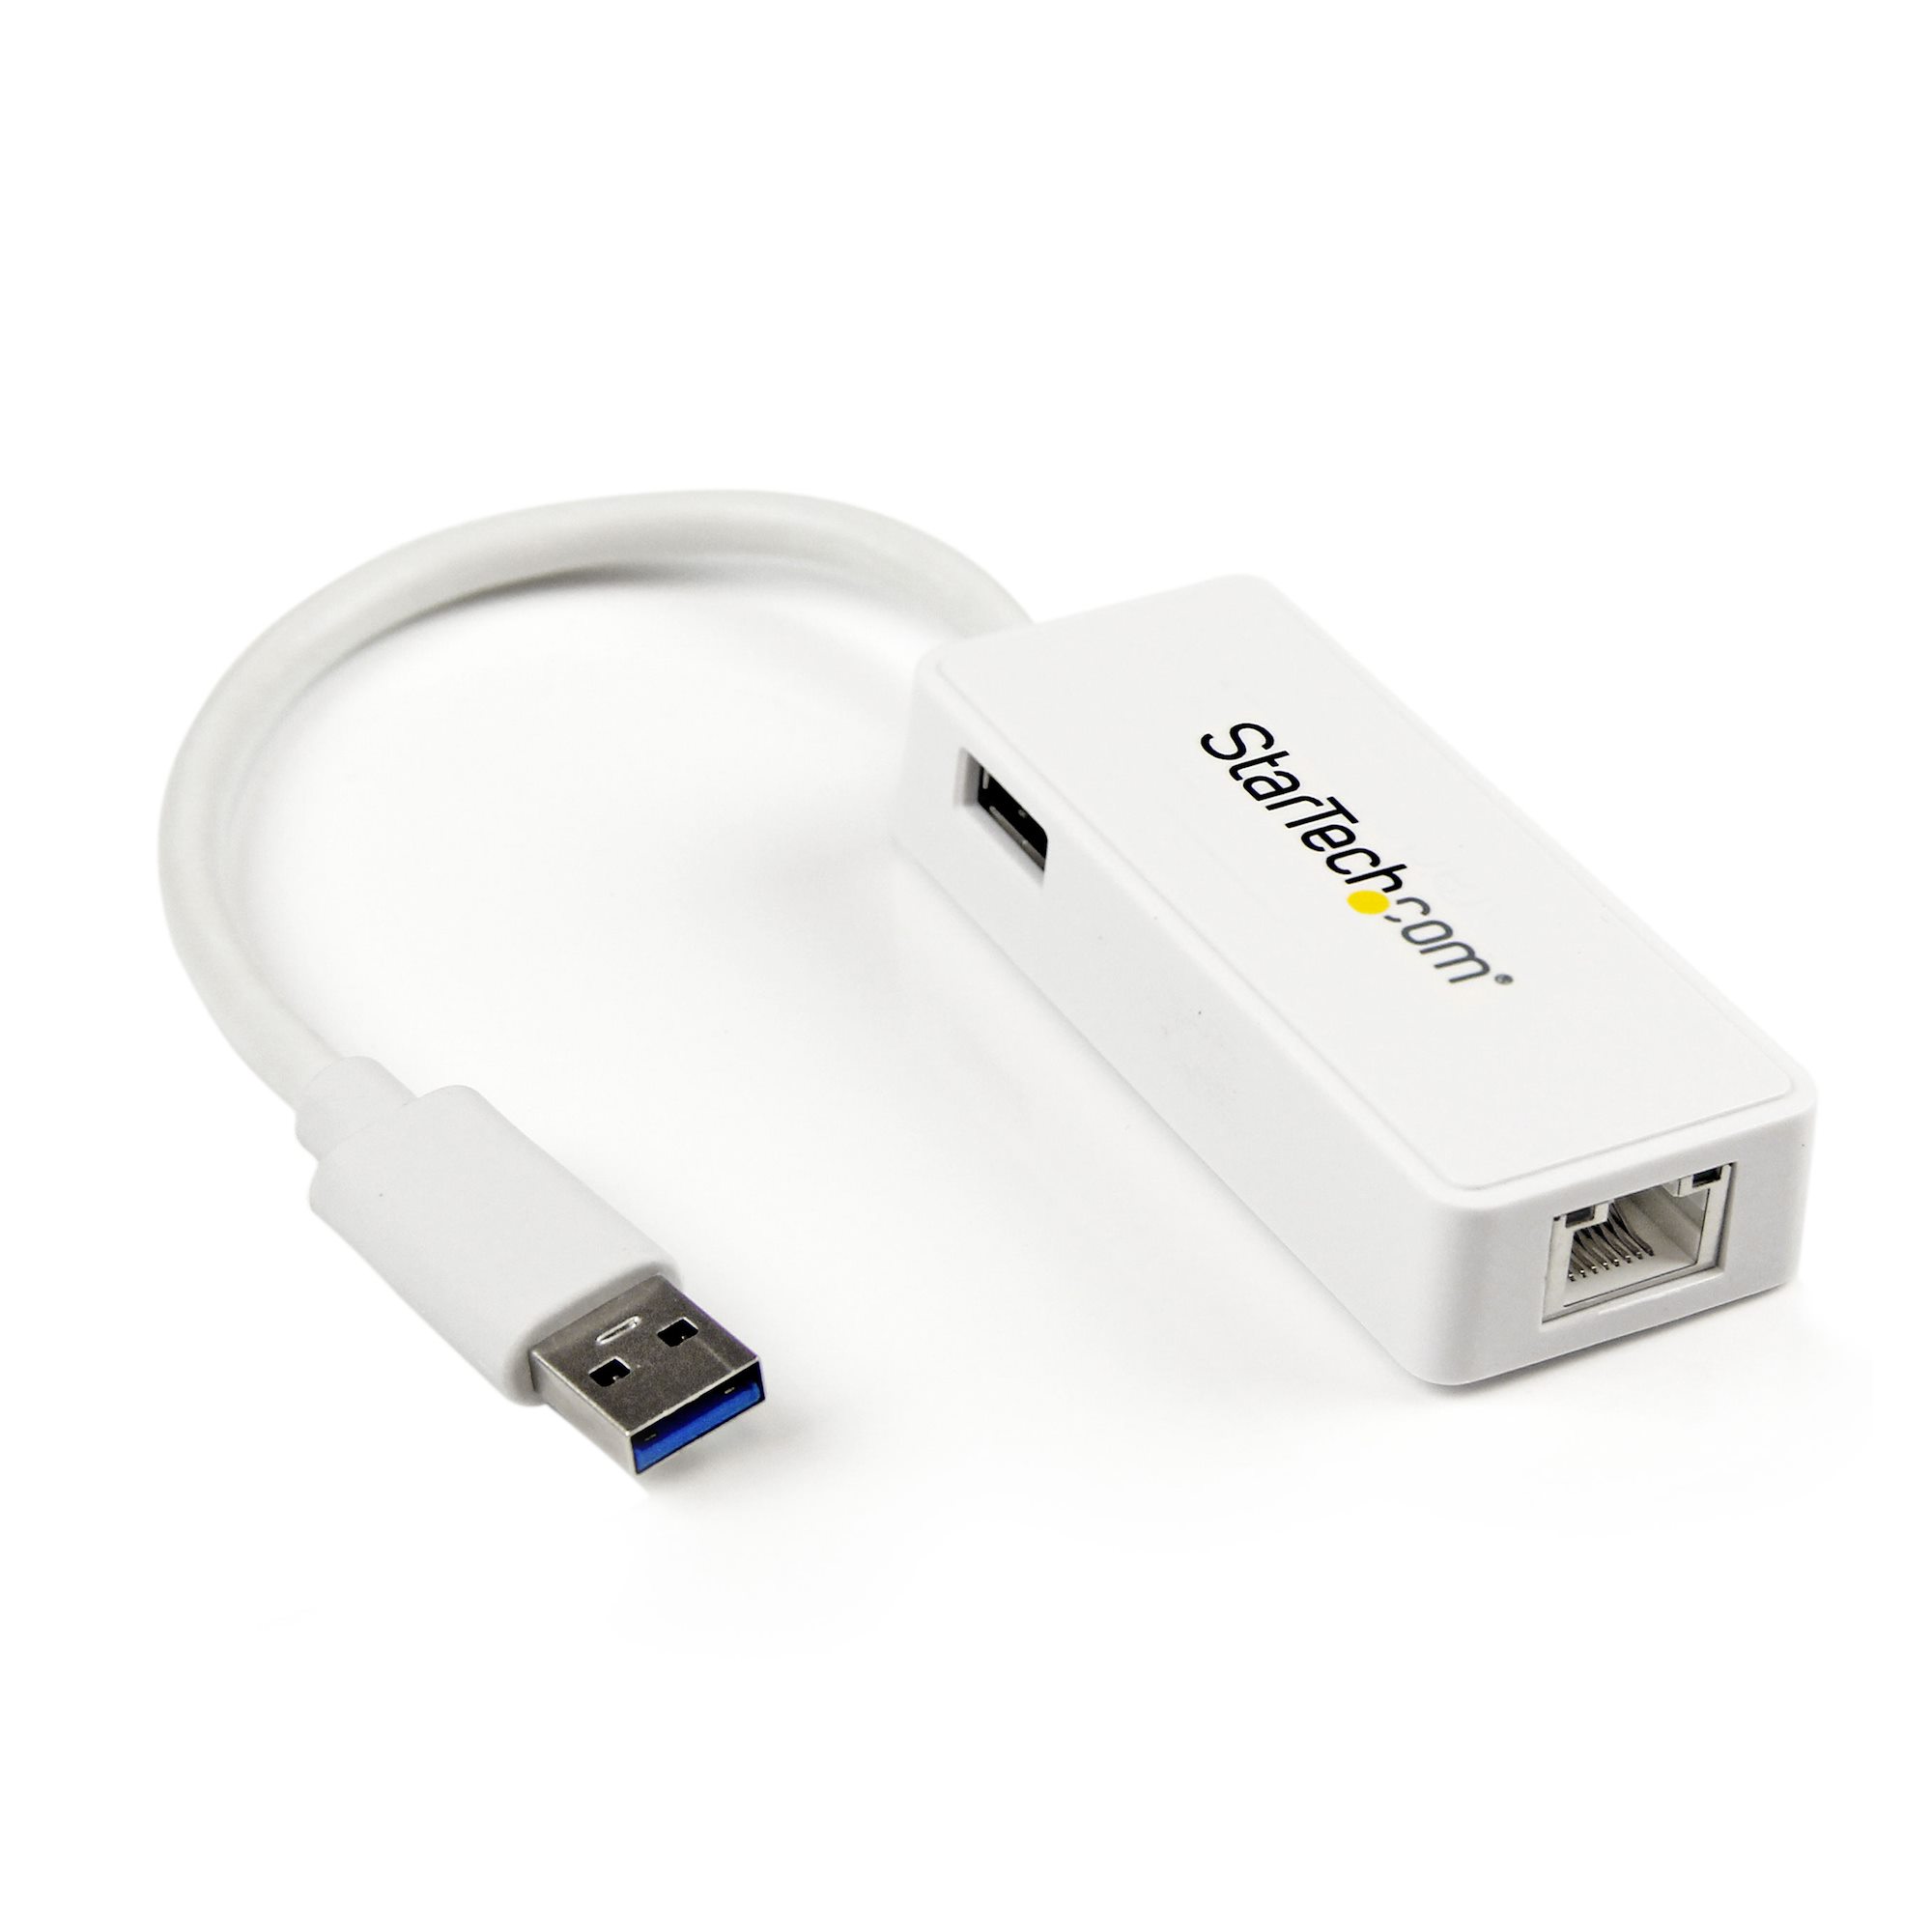 Gigabit 3.0 NIC w/ USB Port - and Thunderbolt Network Adapters StarTech.com